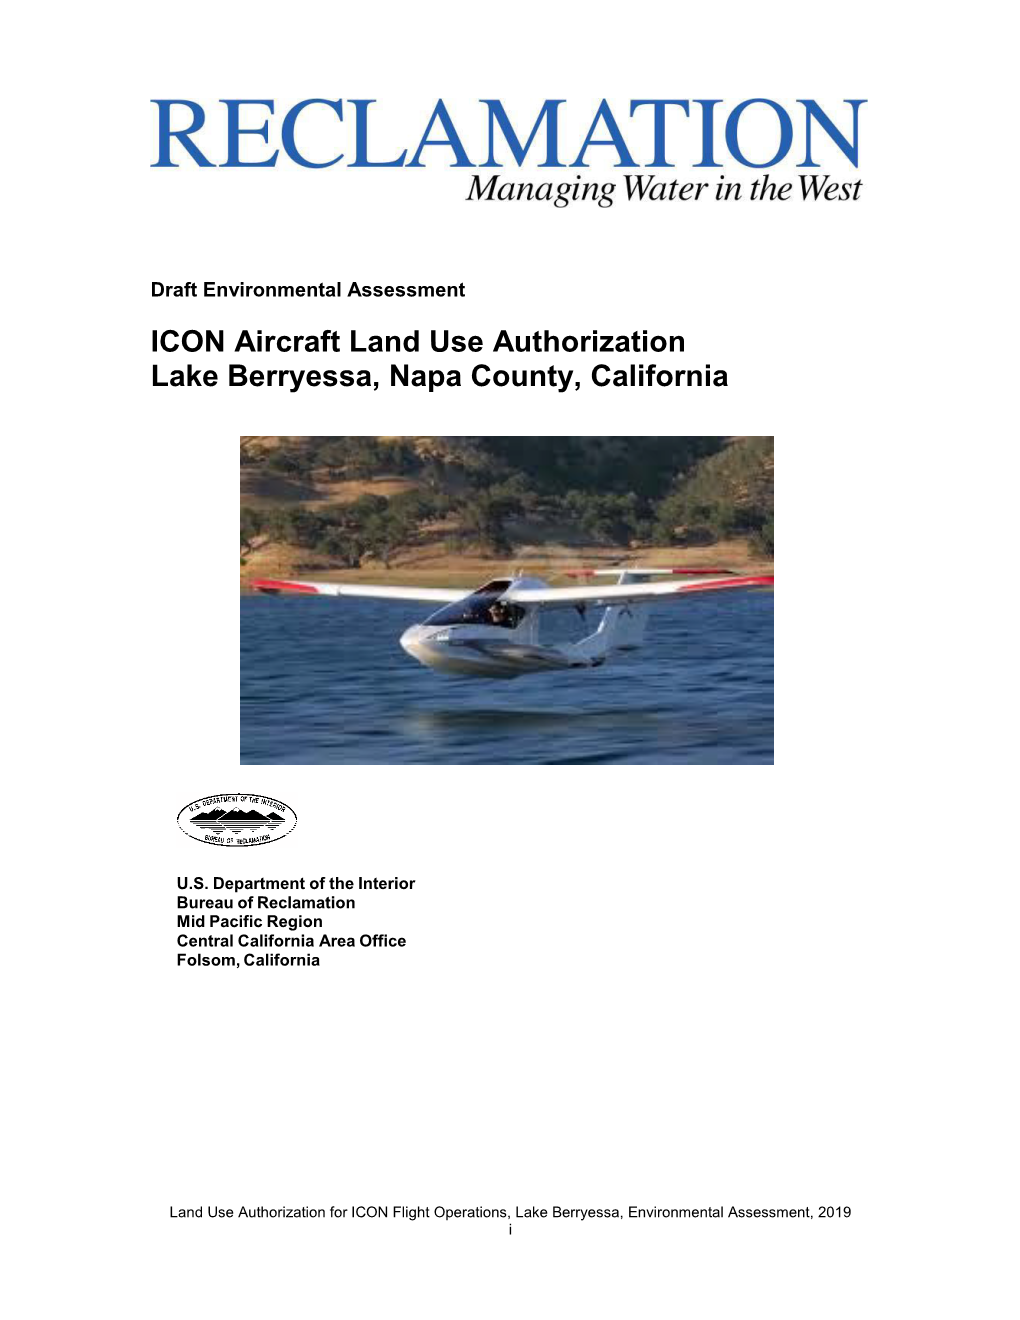 ICON Aircraft Land Use Authorizaiton Lake Berryessa